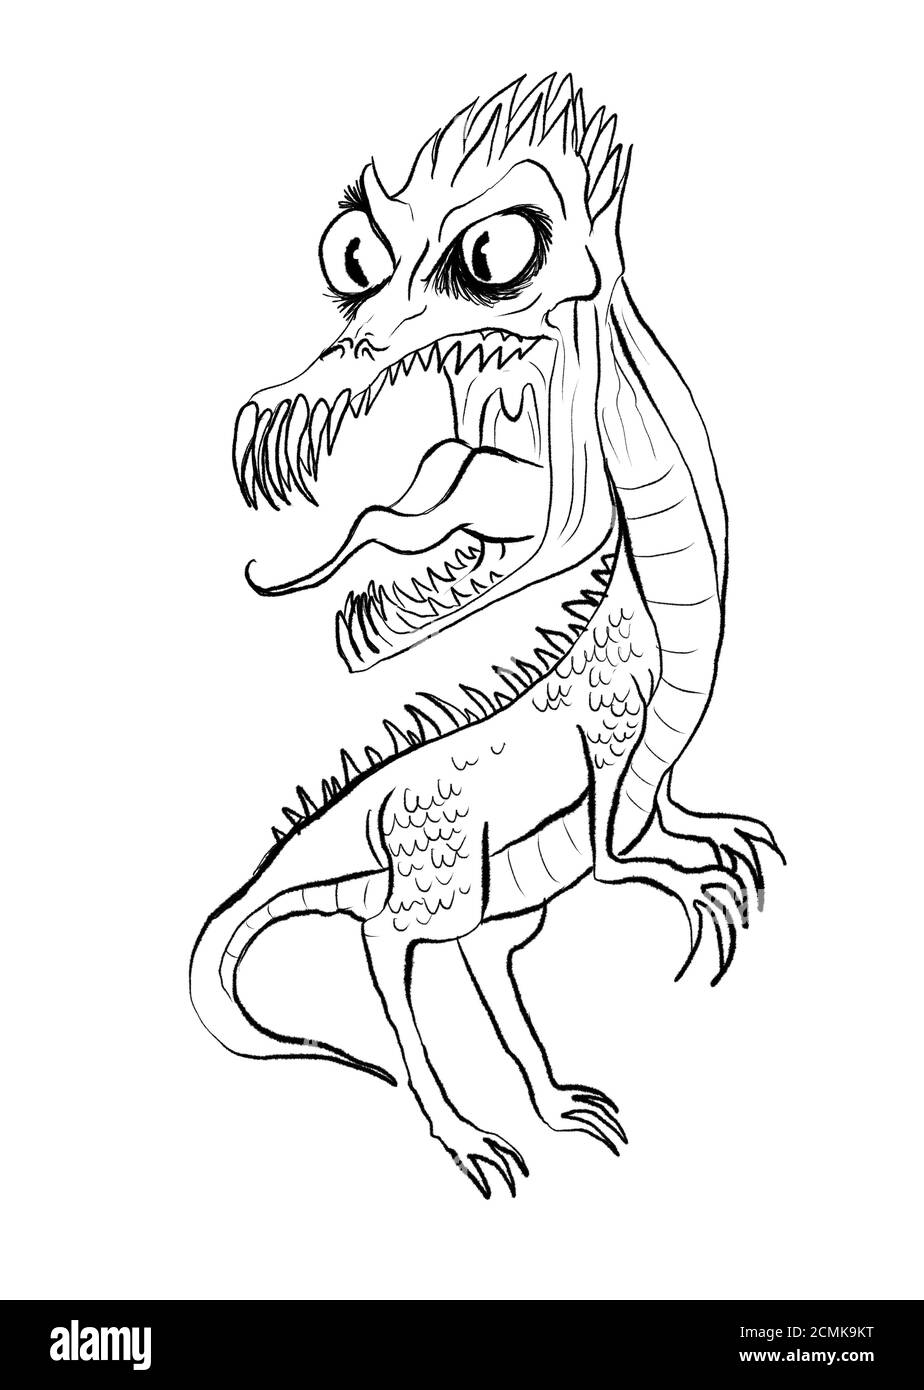 snarling dragon or dinosaur illustration Stock Photo